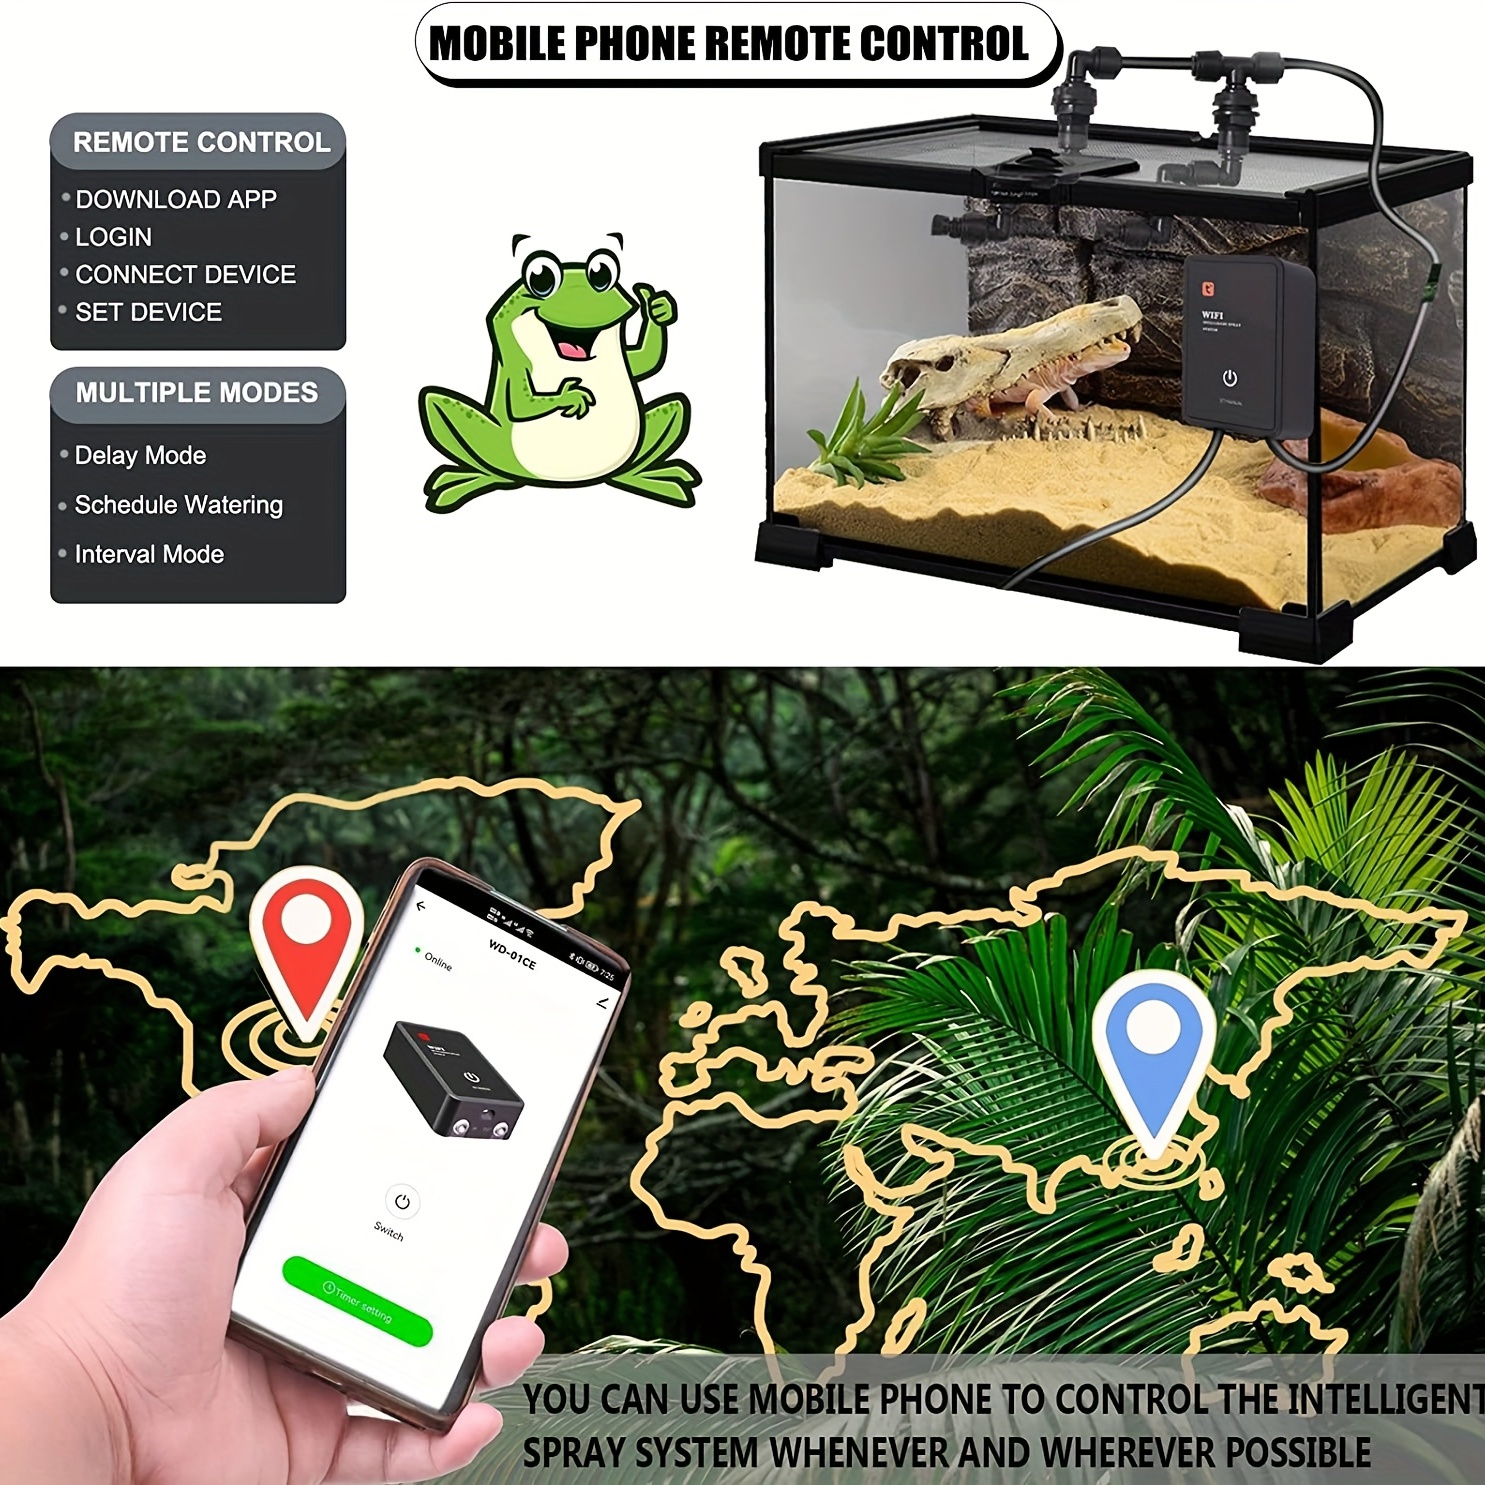 Reptile Humidity Monitoring & Controls, Terrarium Supplies